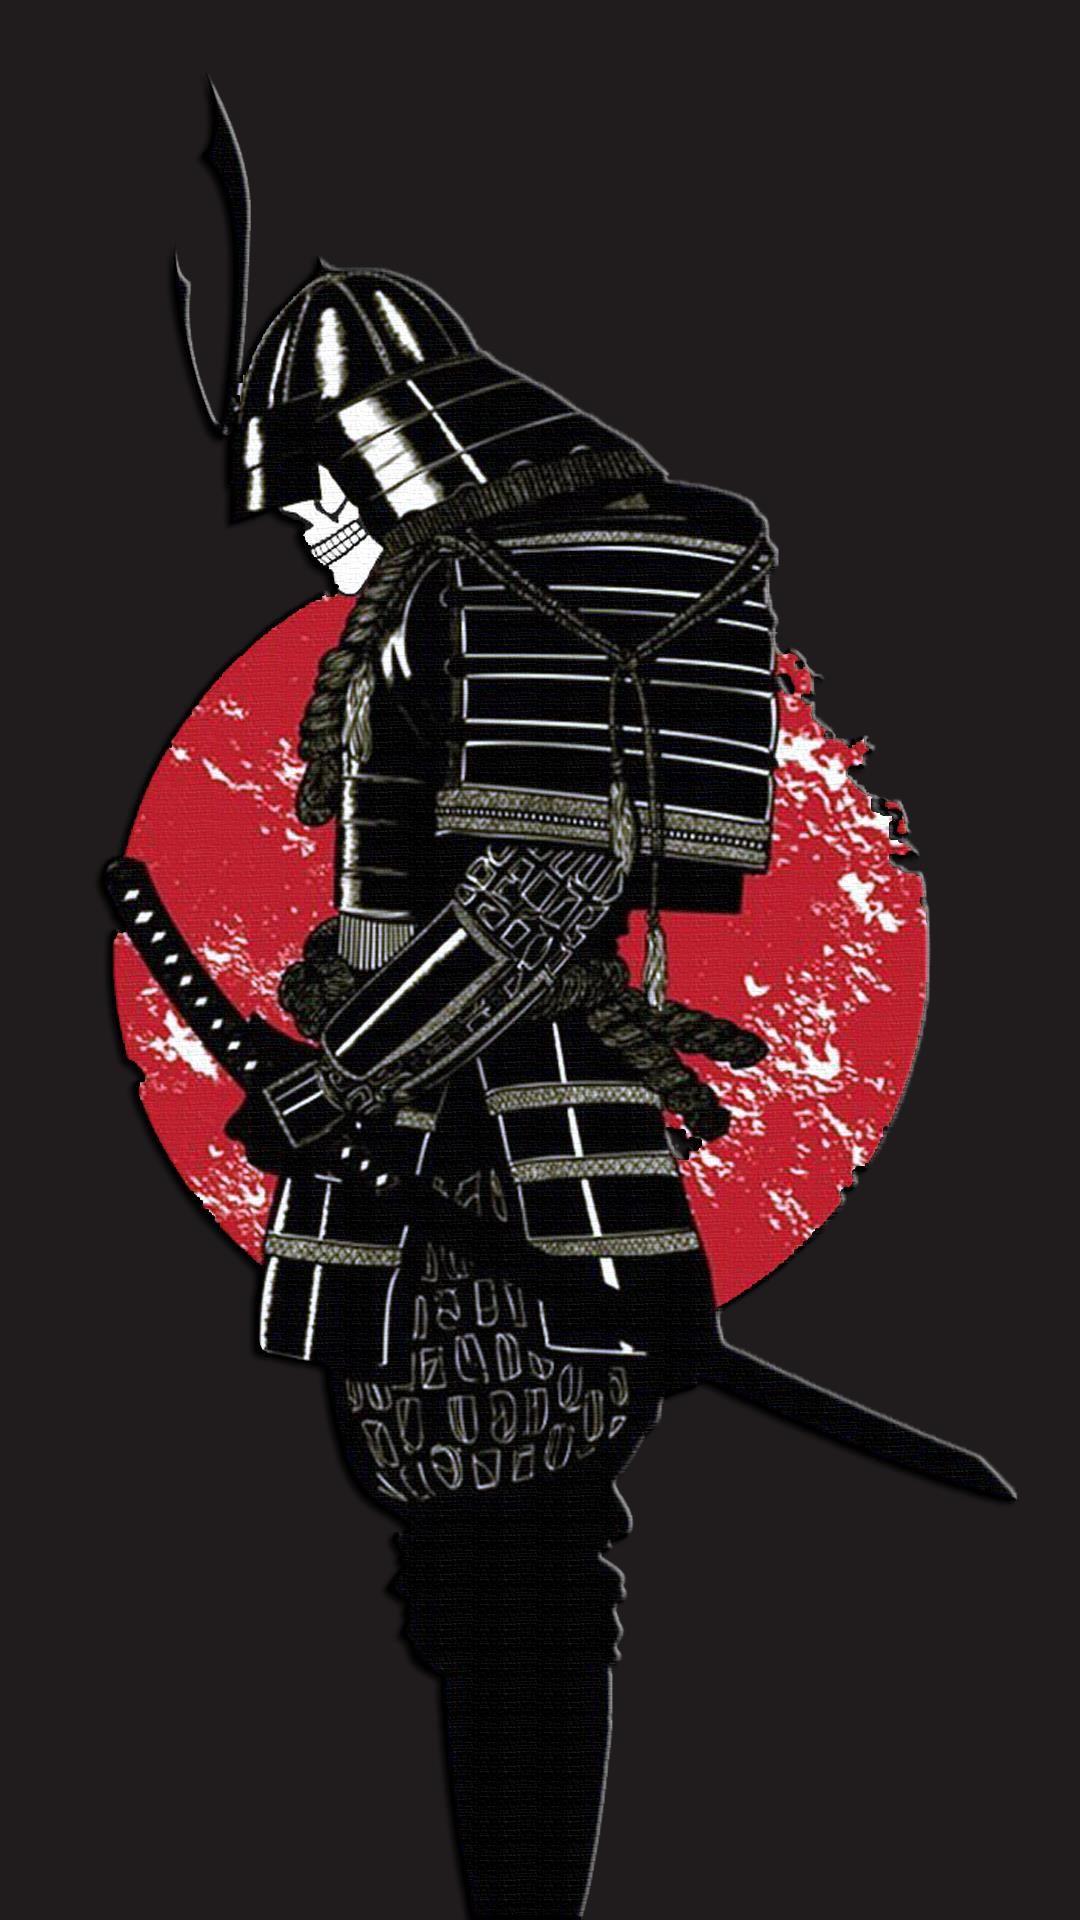 Samurai Smartphone Wallpaper Free Samurai Smartphone Background